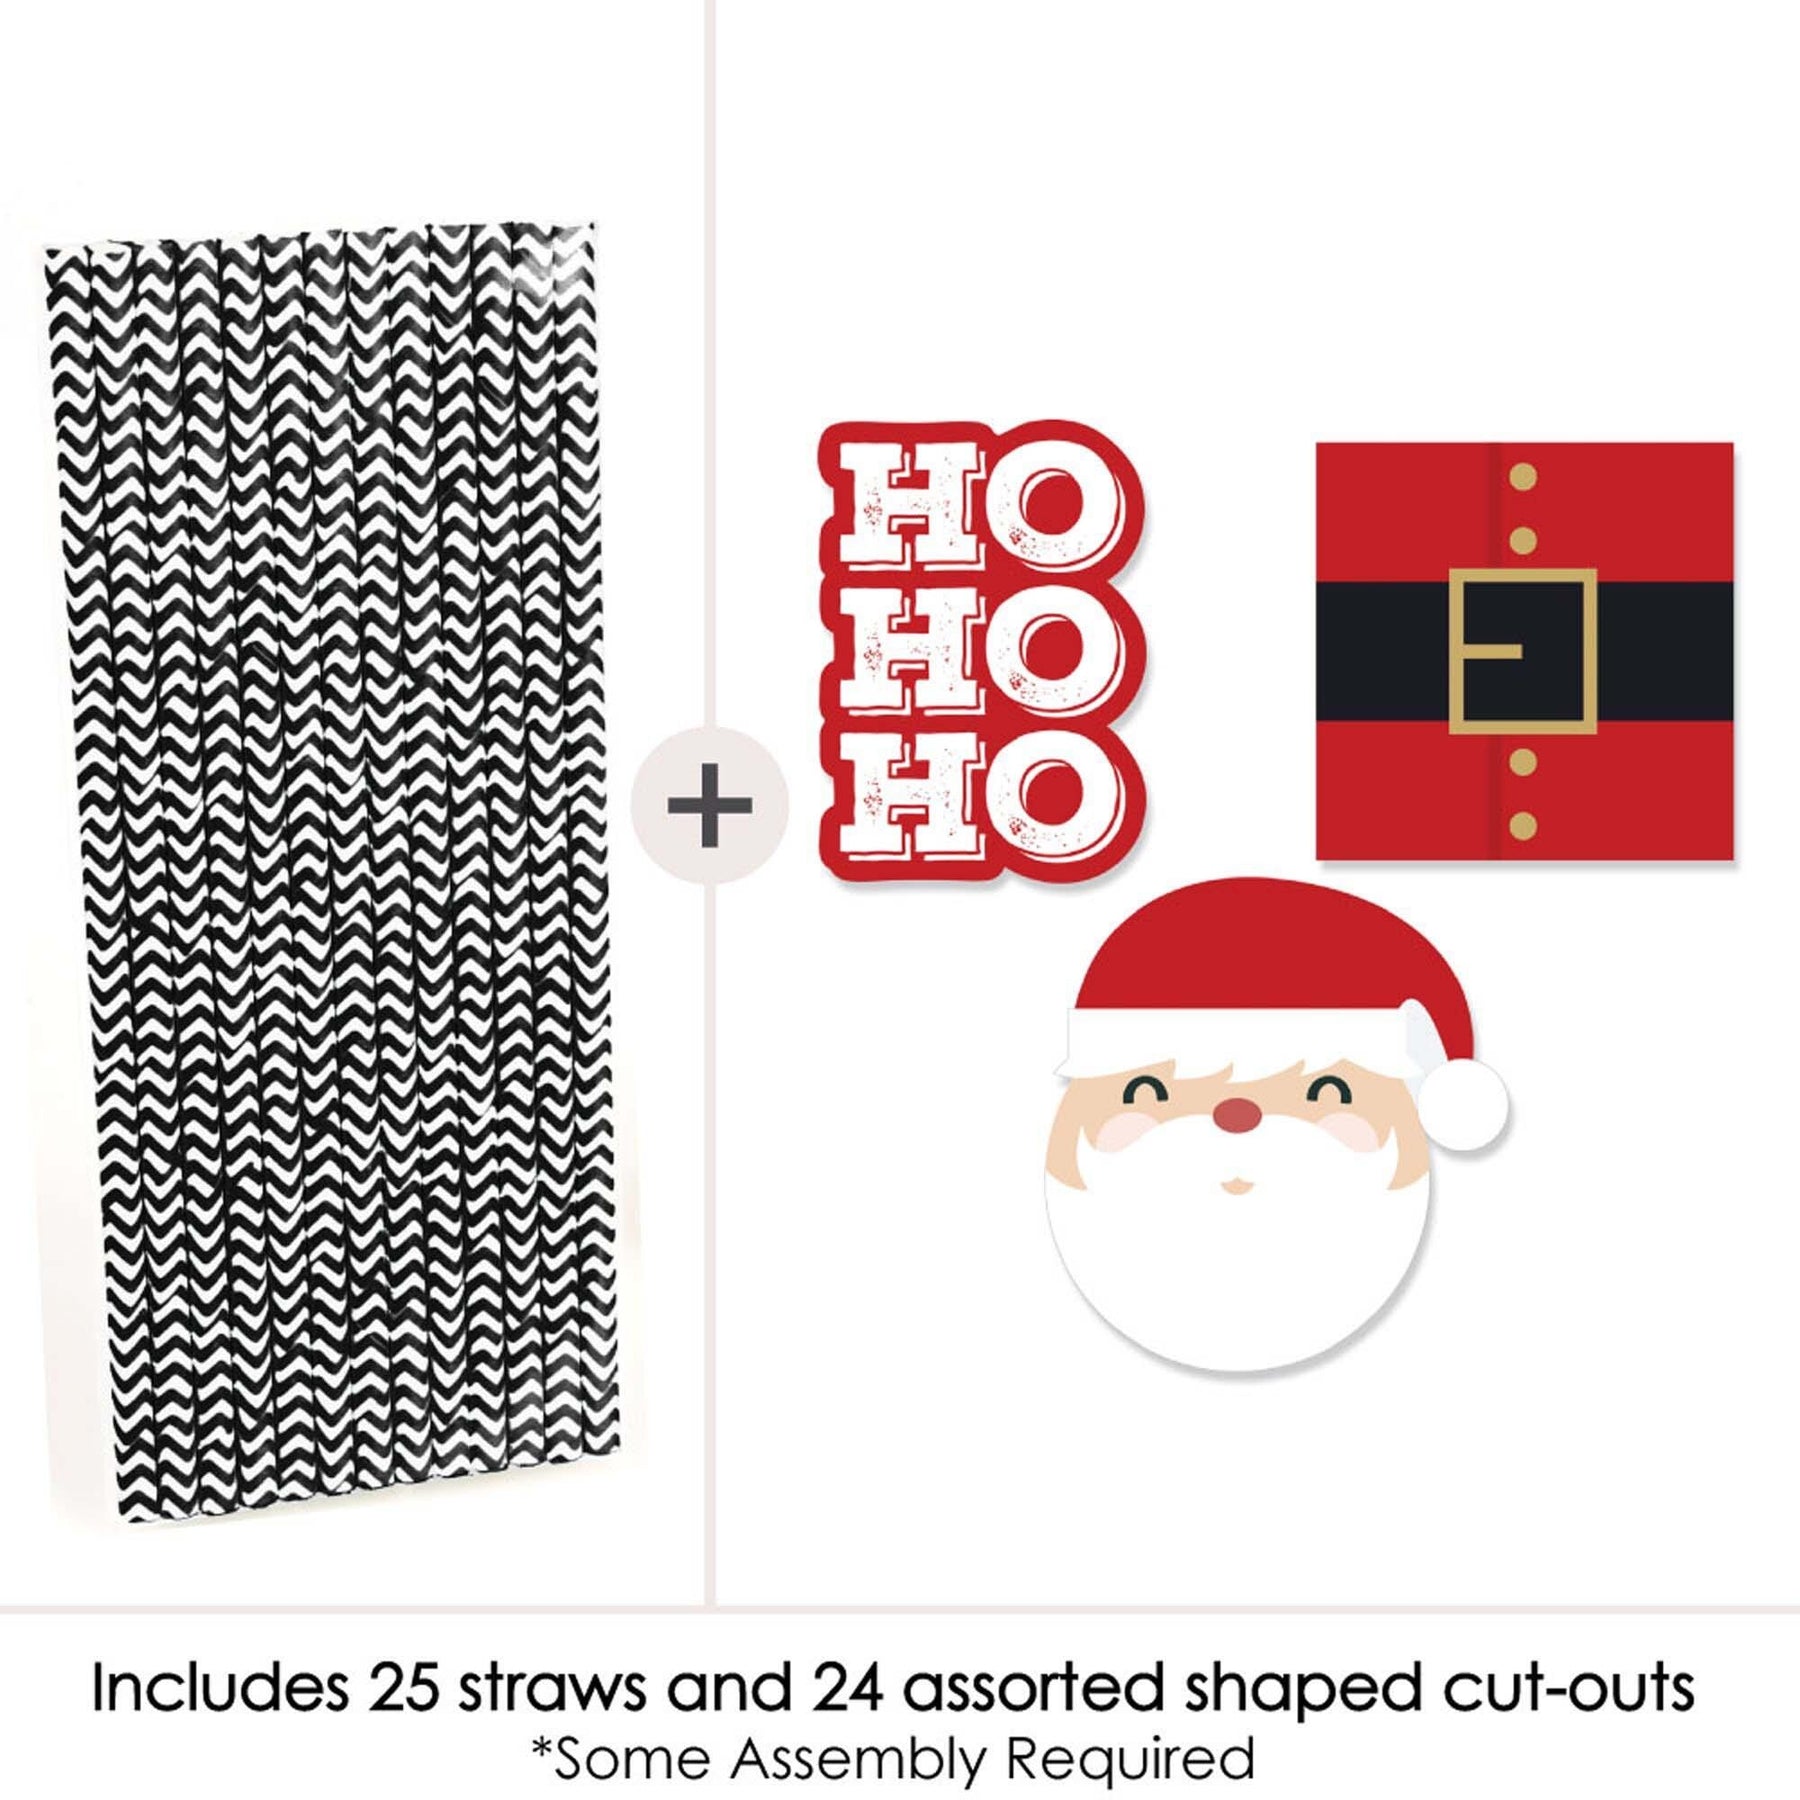 Sanat & Reindeer Christmas Paper Drinking Straws - Box of 38